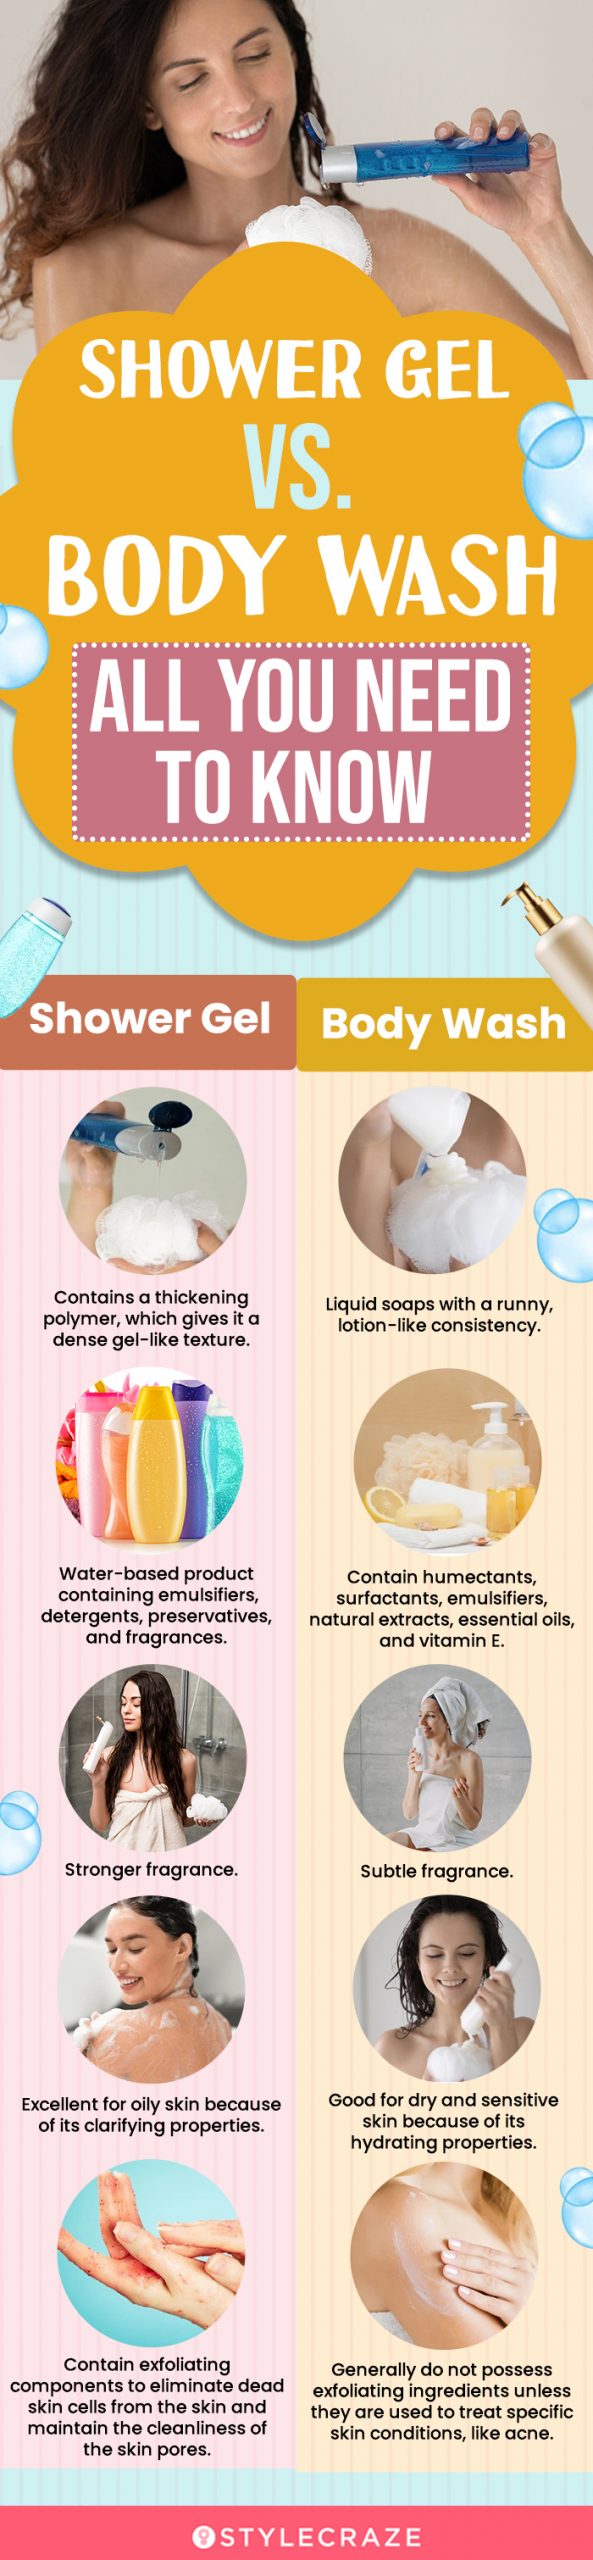 shower gel vs. body wash (infographic)